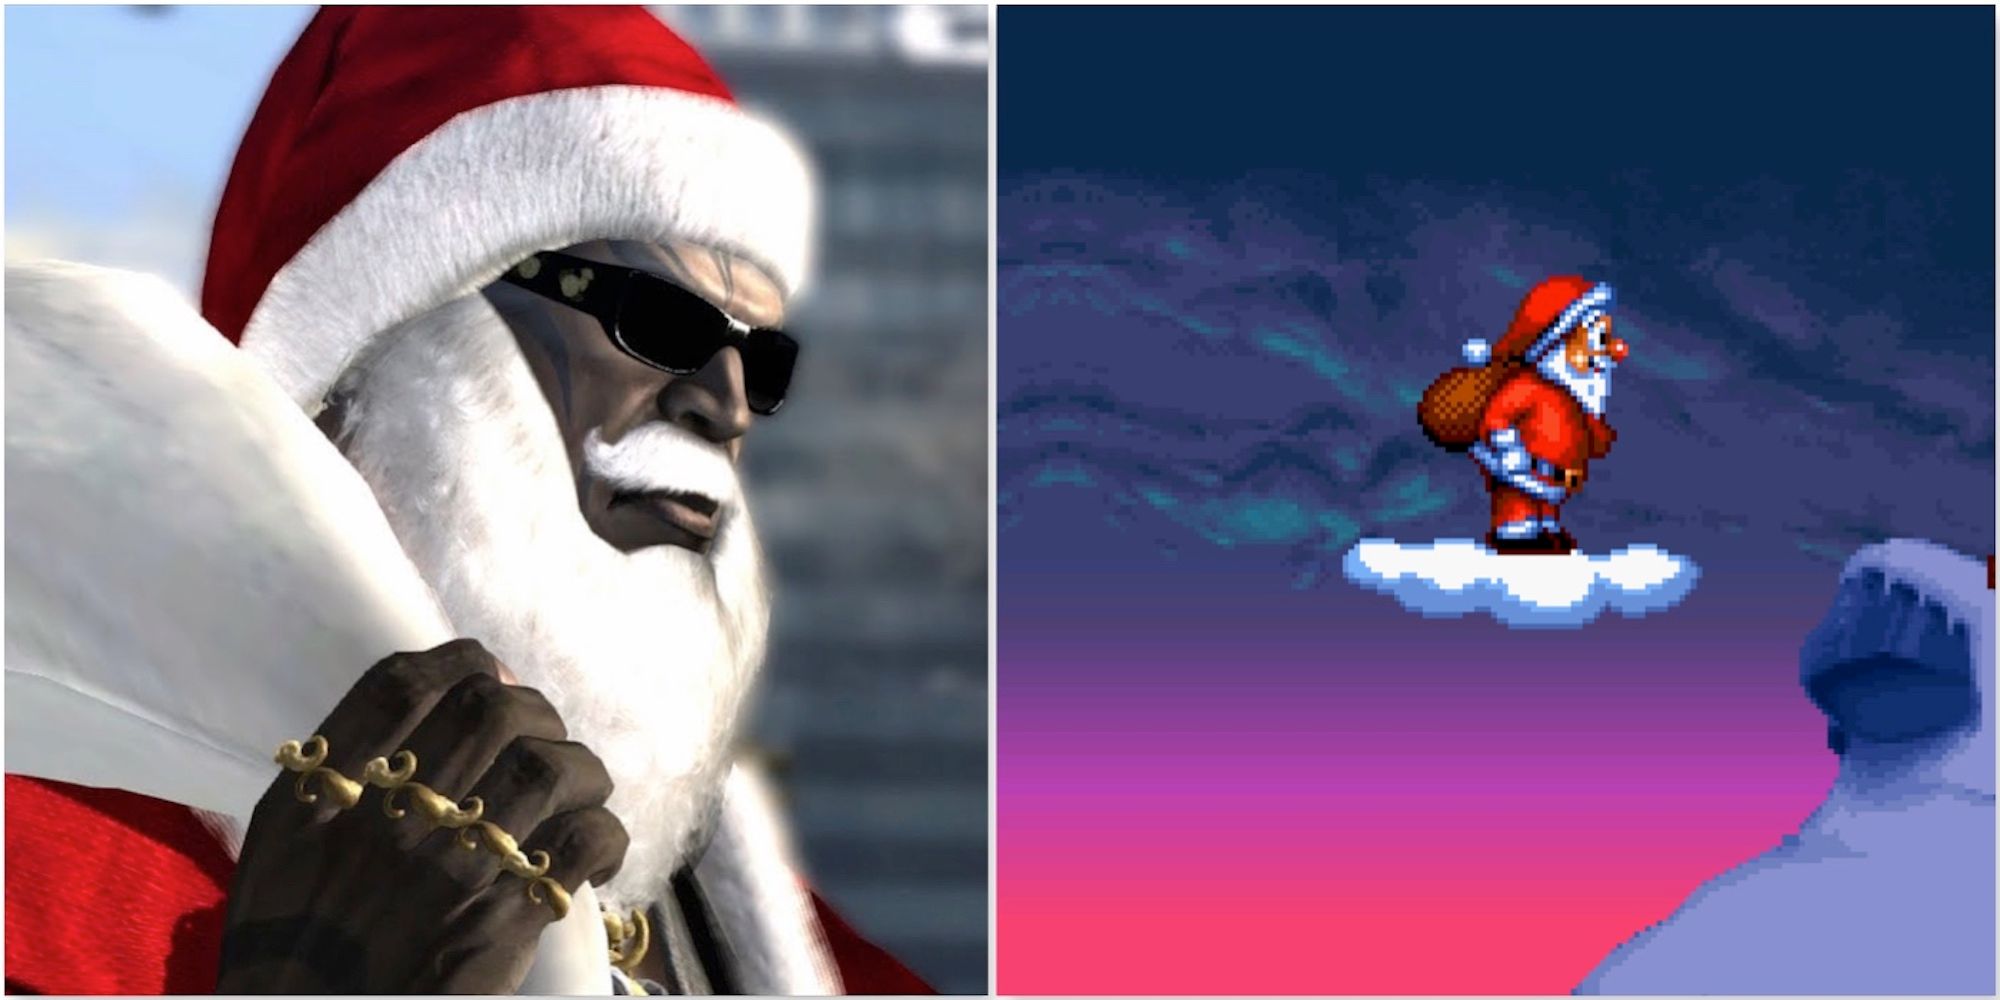 Rodin from Bayonetta 2 and Santa from Daze Before Christmas